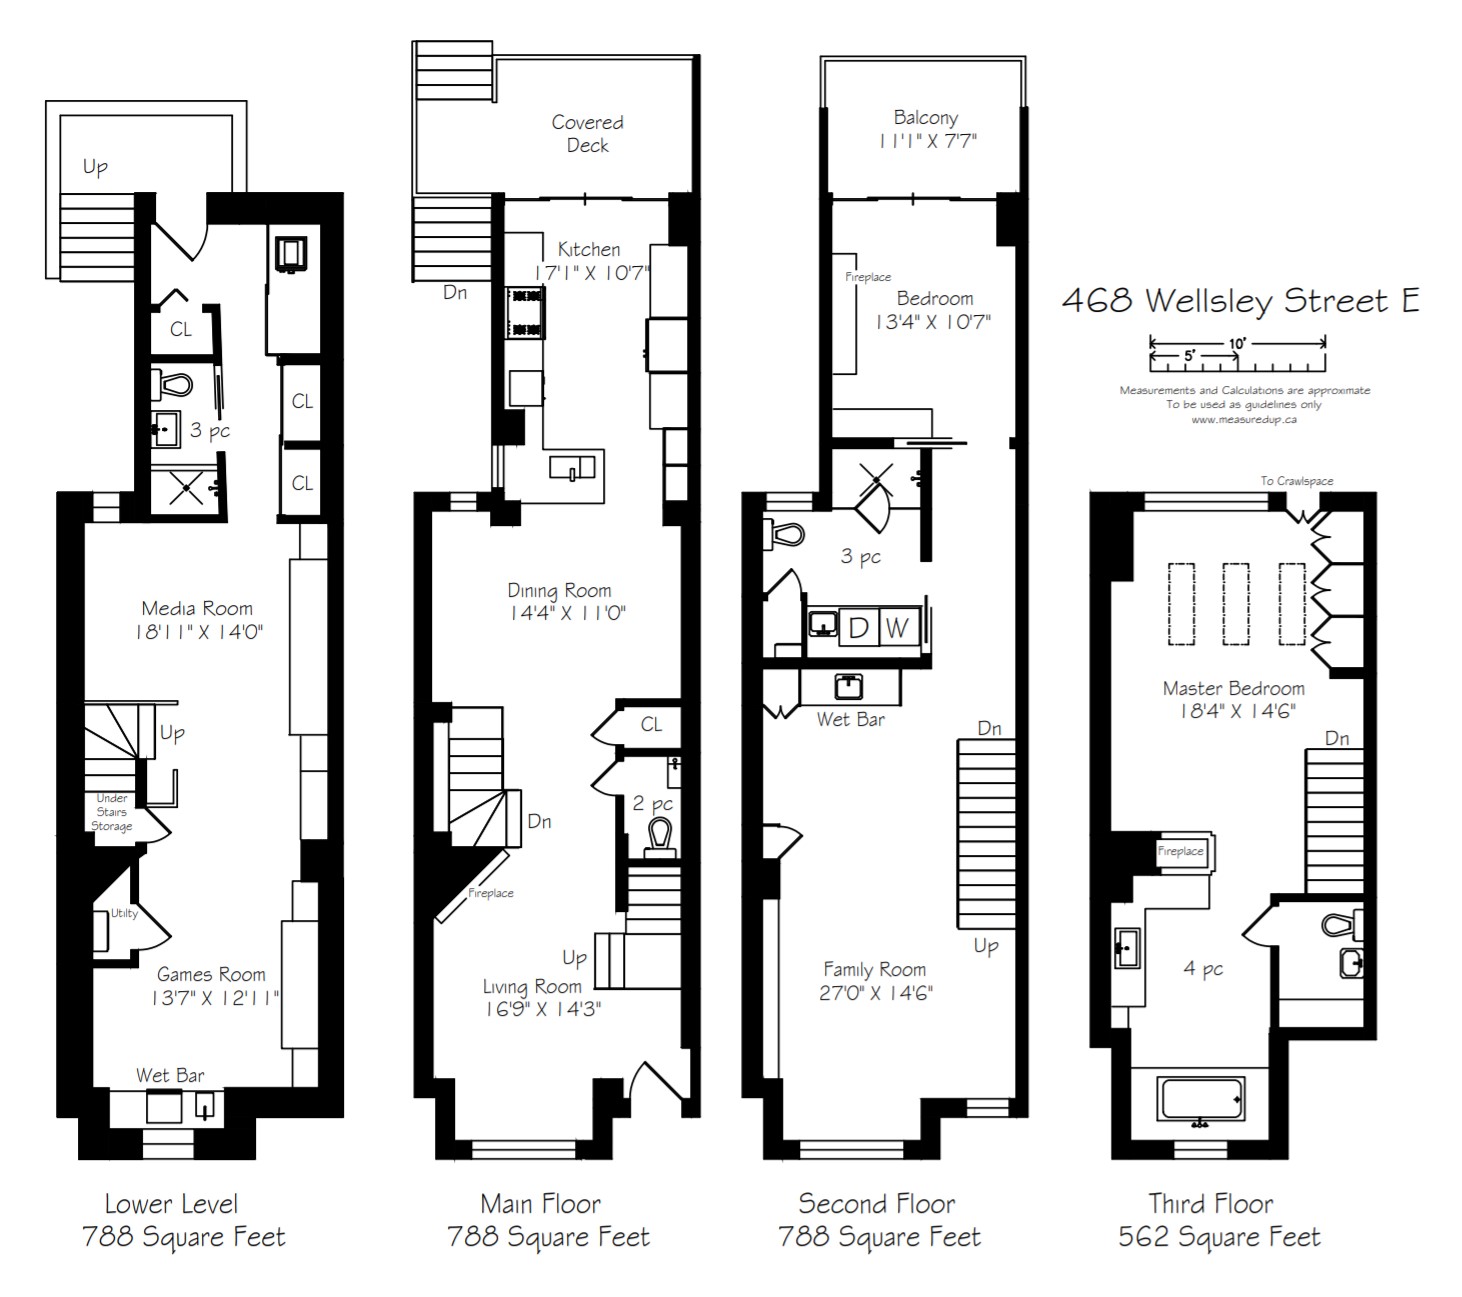 468 Wellesley St - Cabbagetown Toronot - Floorplan